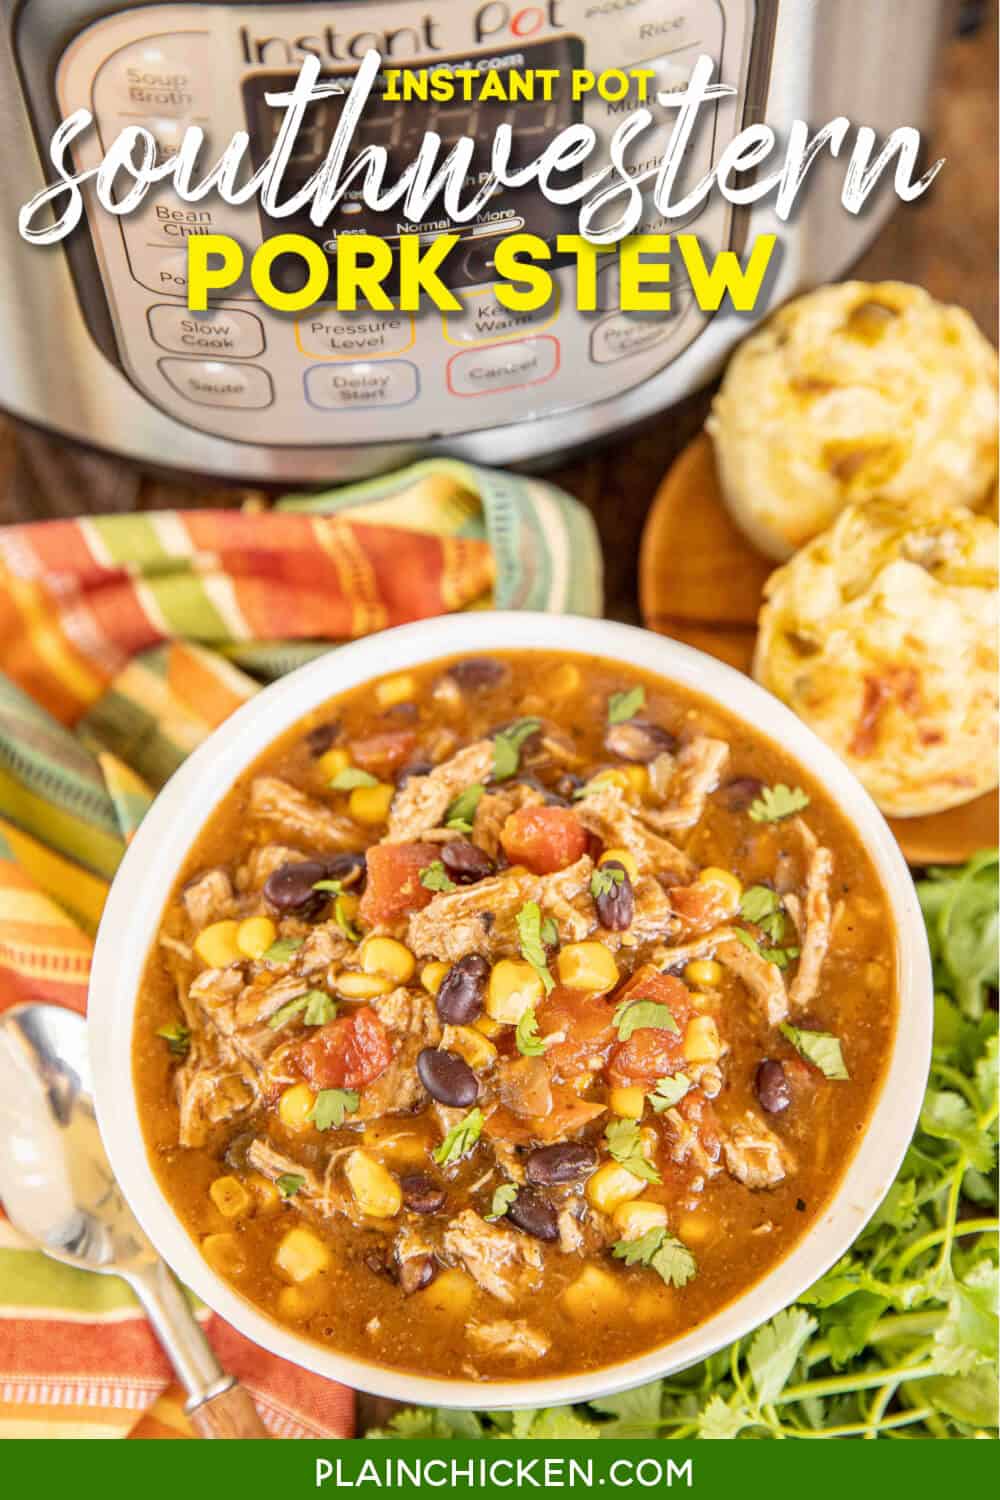 https://www.plainchicken.com/wp-content/uploads/2020/08/instant-pot-southwestern-pork-stew-3.jpg